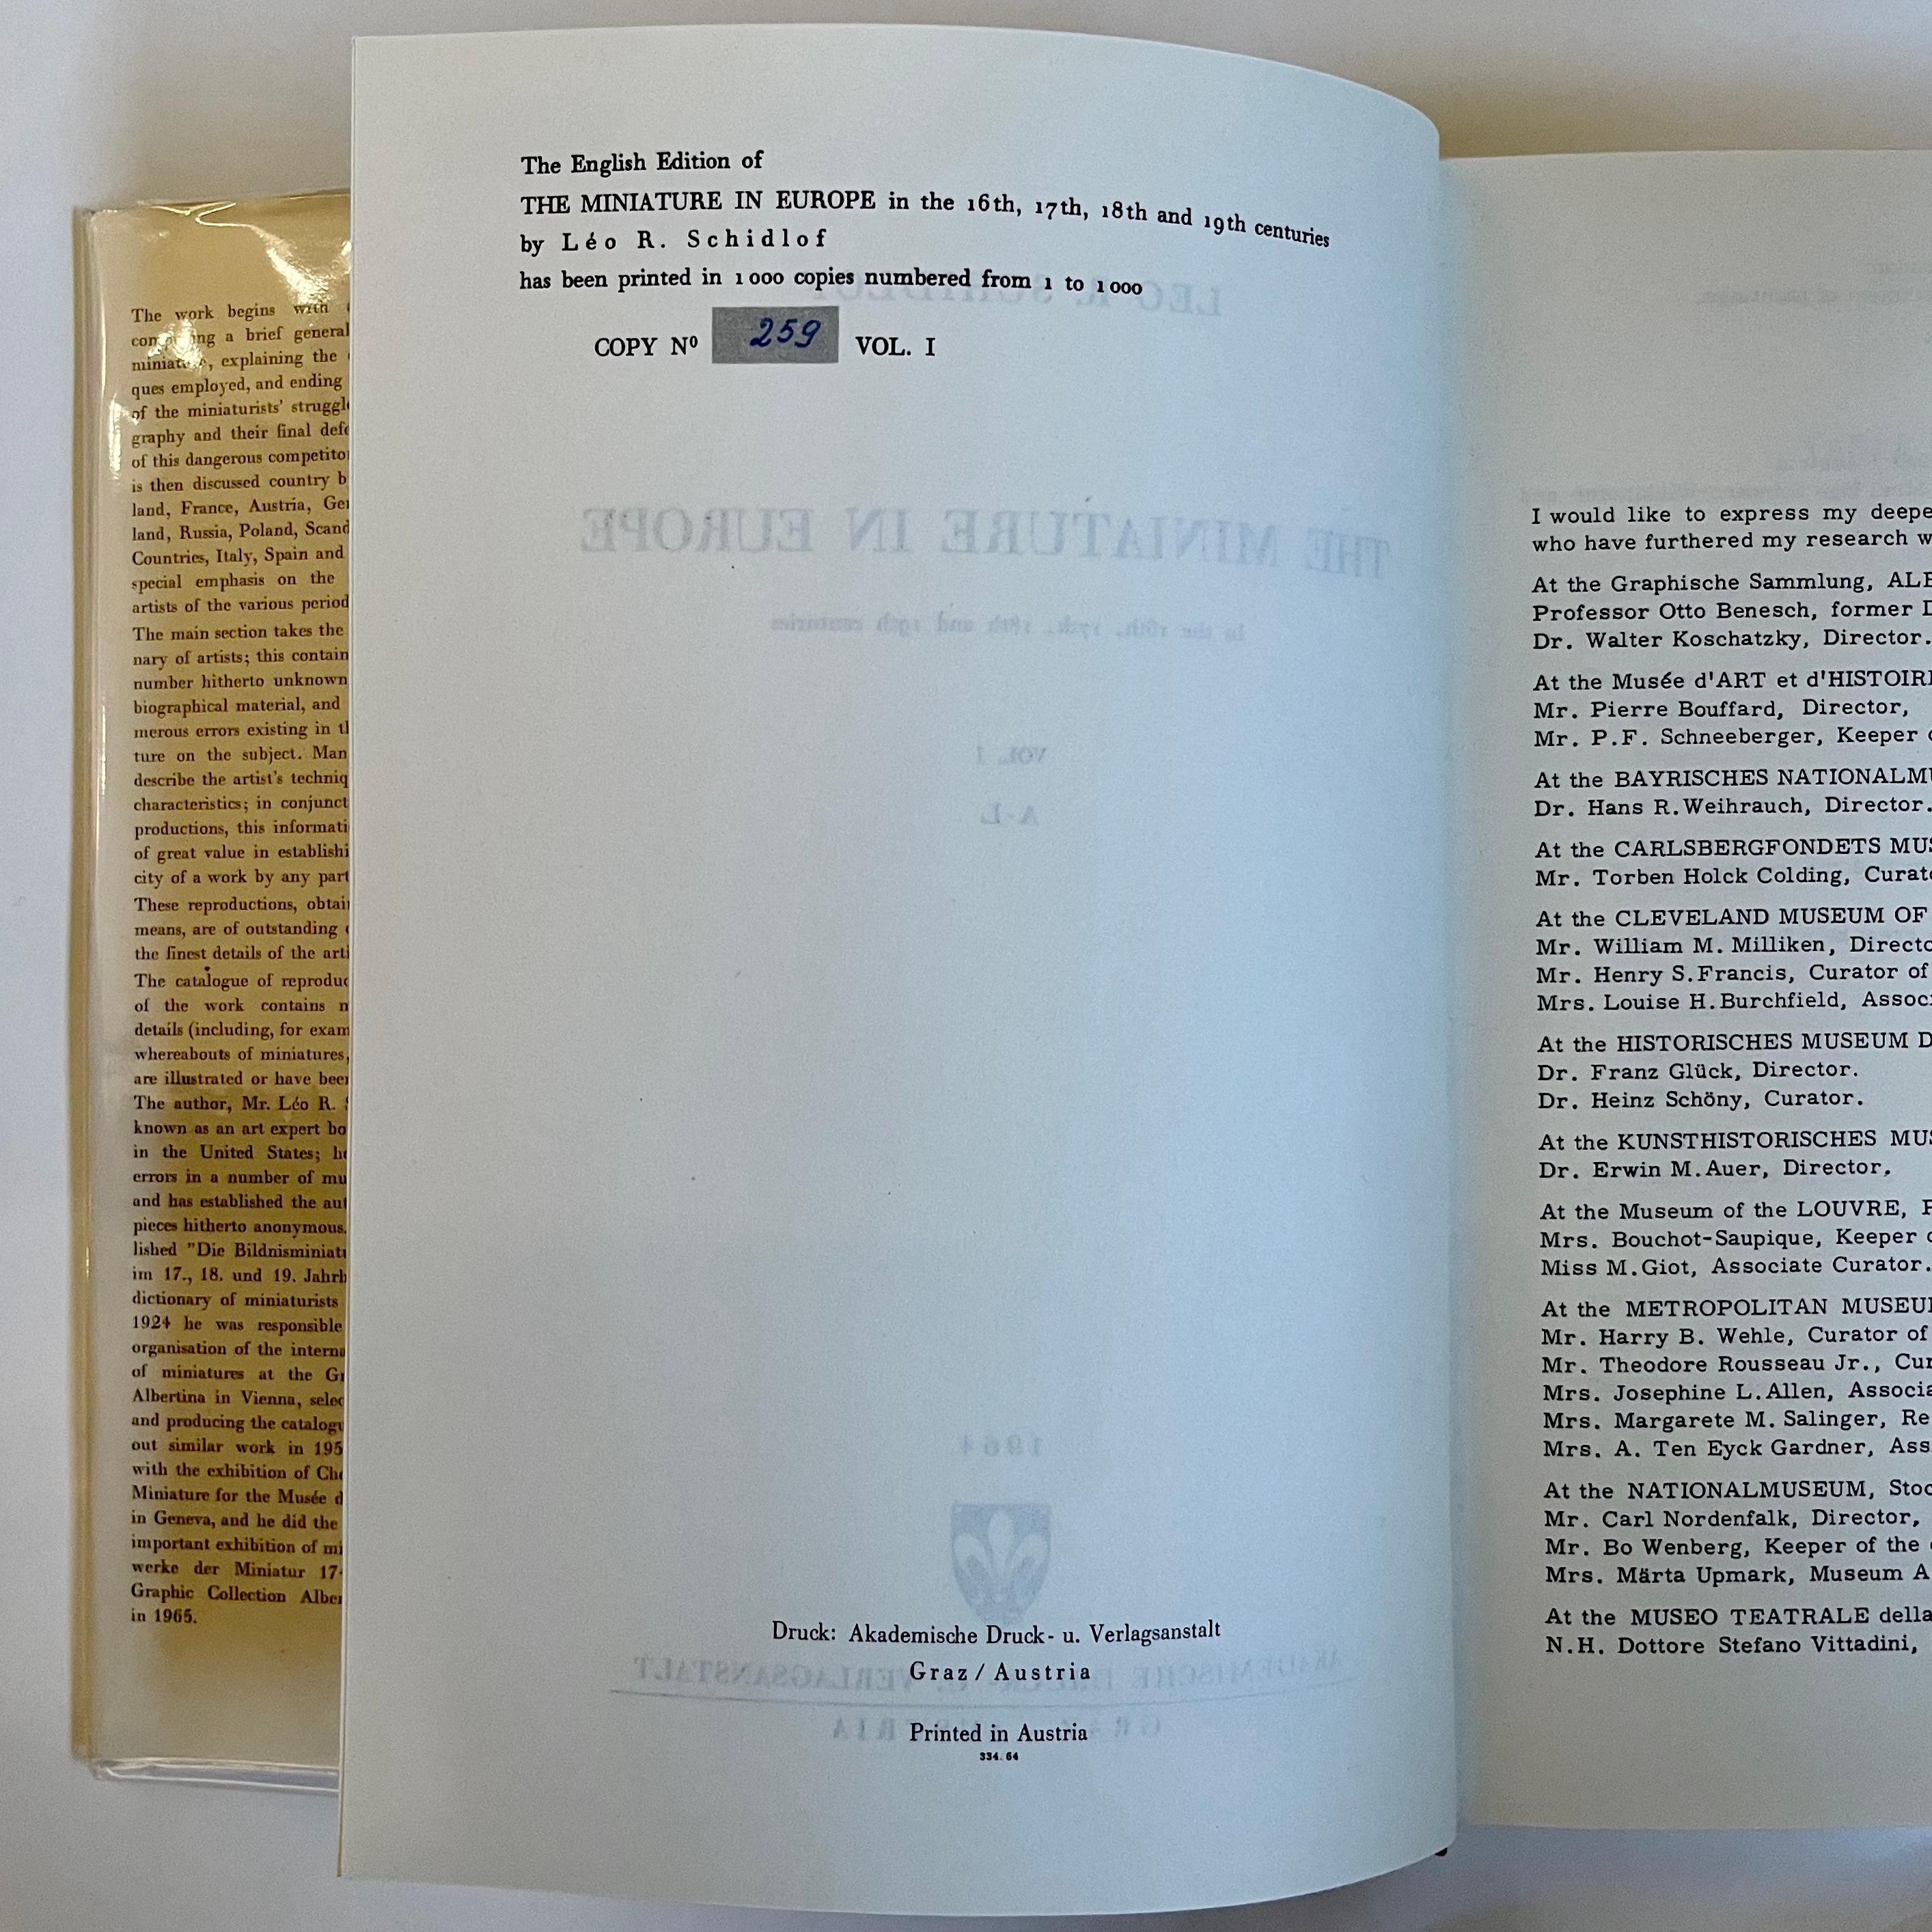 Paper The Miniature in Europe, 4 volumes - Leo R. Schidlof - Akademische Druck, 1964